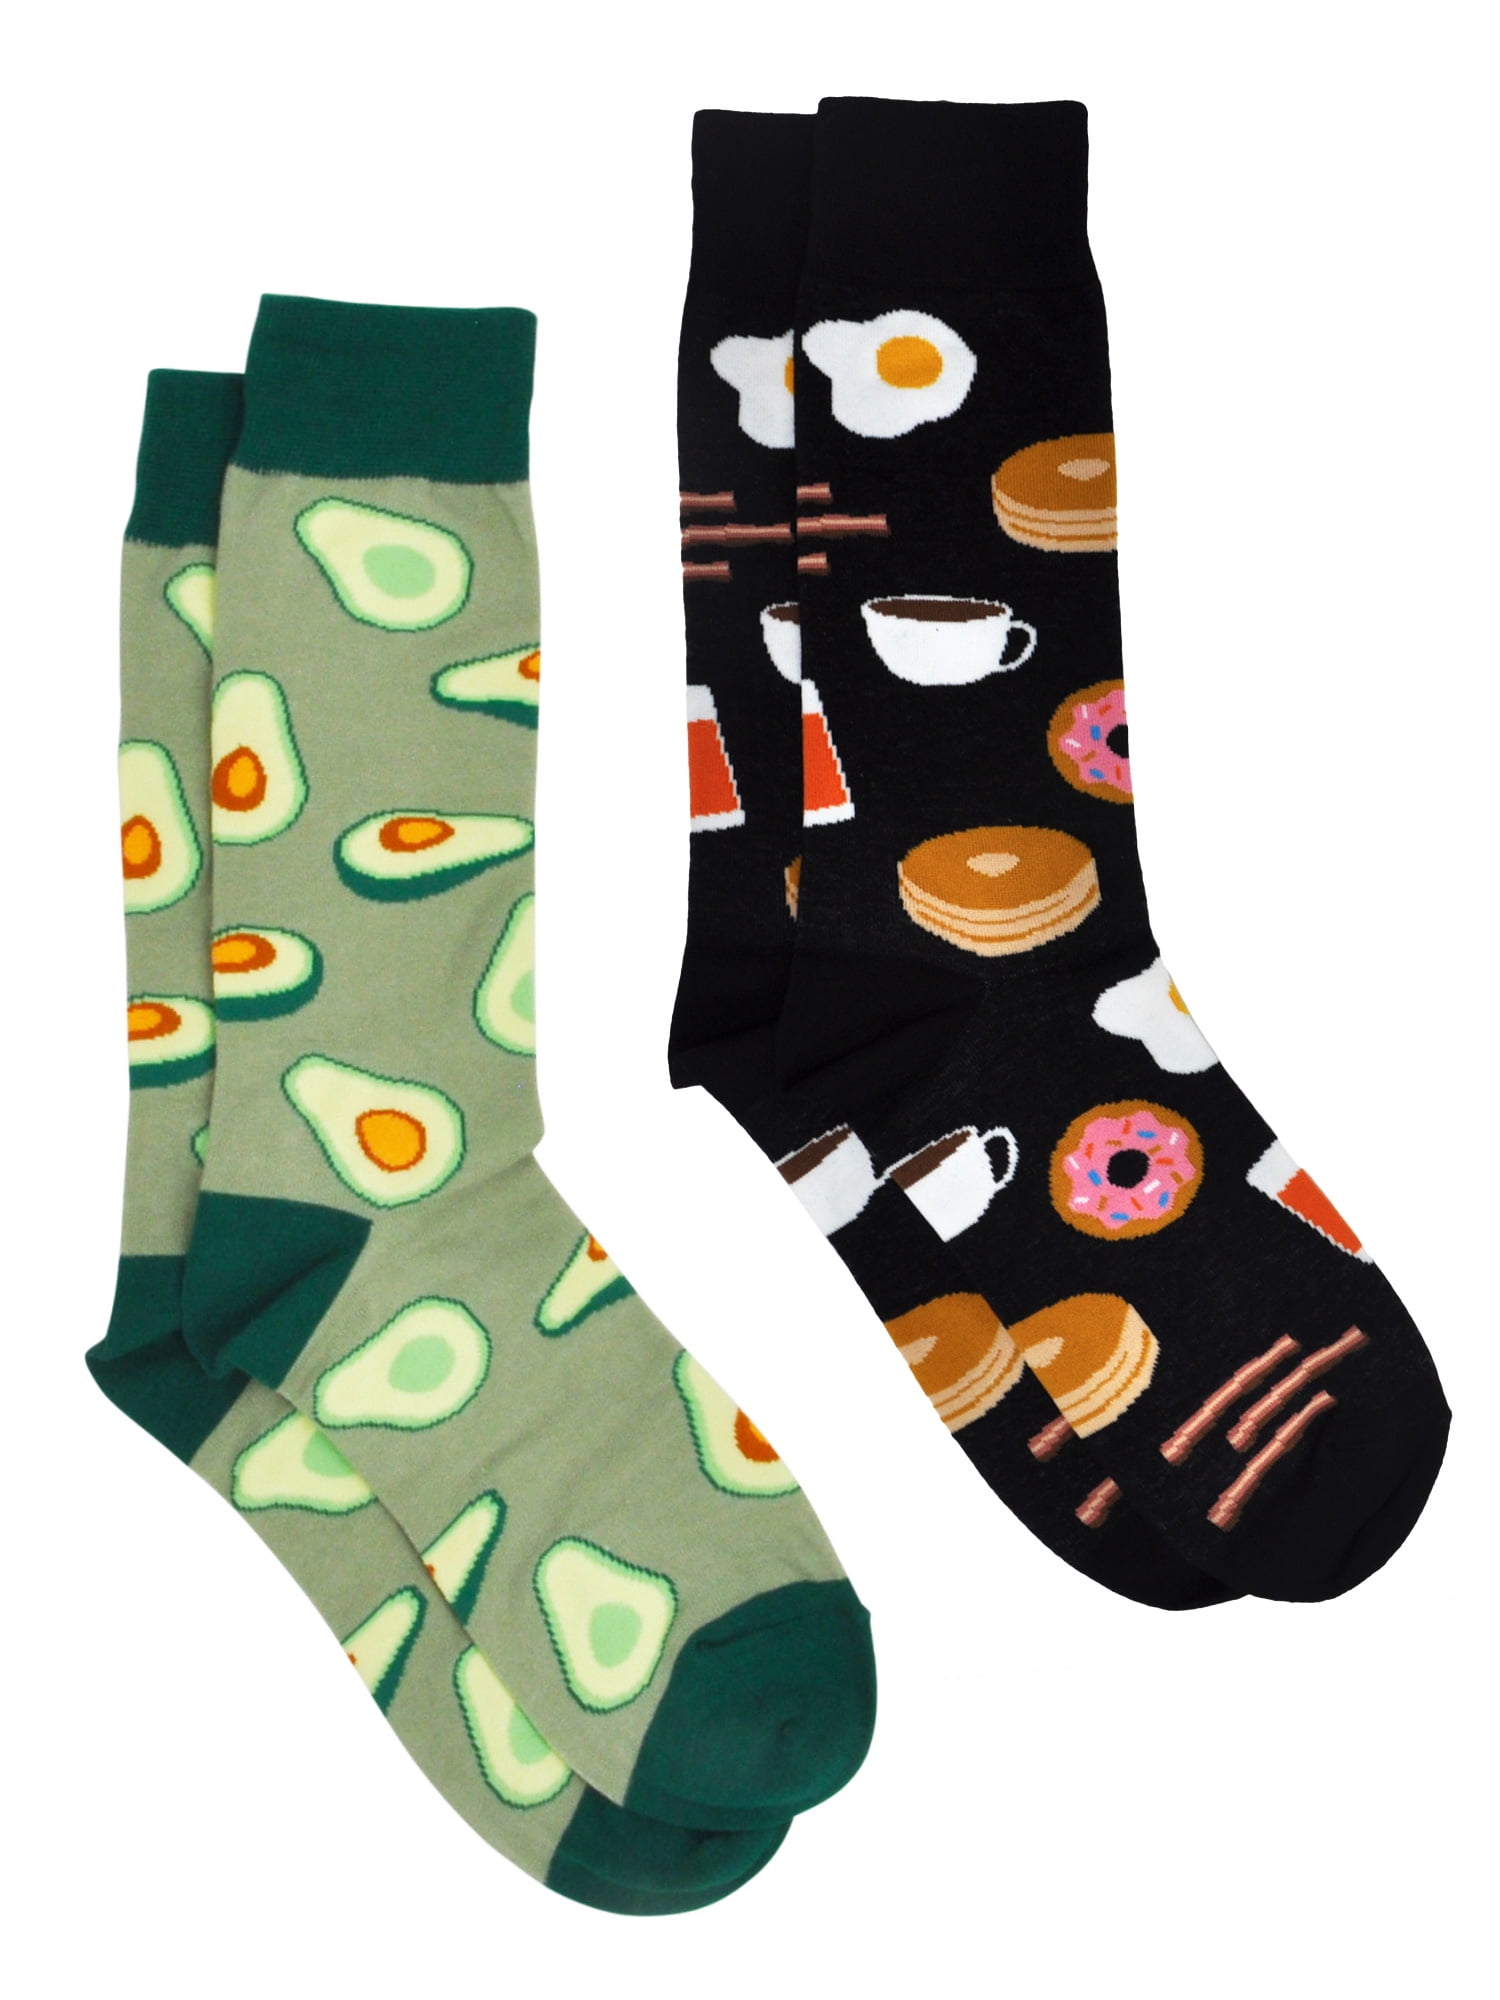 Avocado Omelette Burger Sushi Apple/Plant/Fruit Food Socks Funny Socks Happy Sox